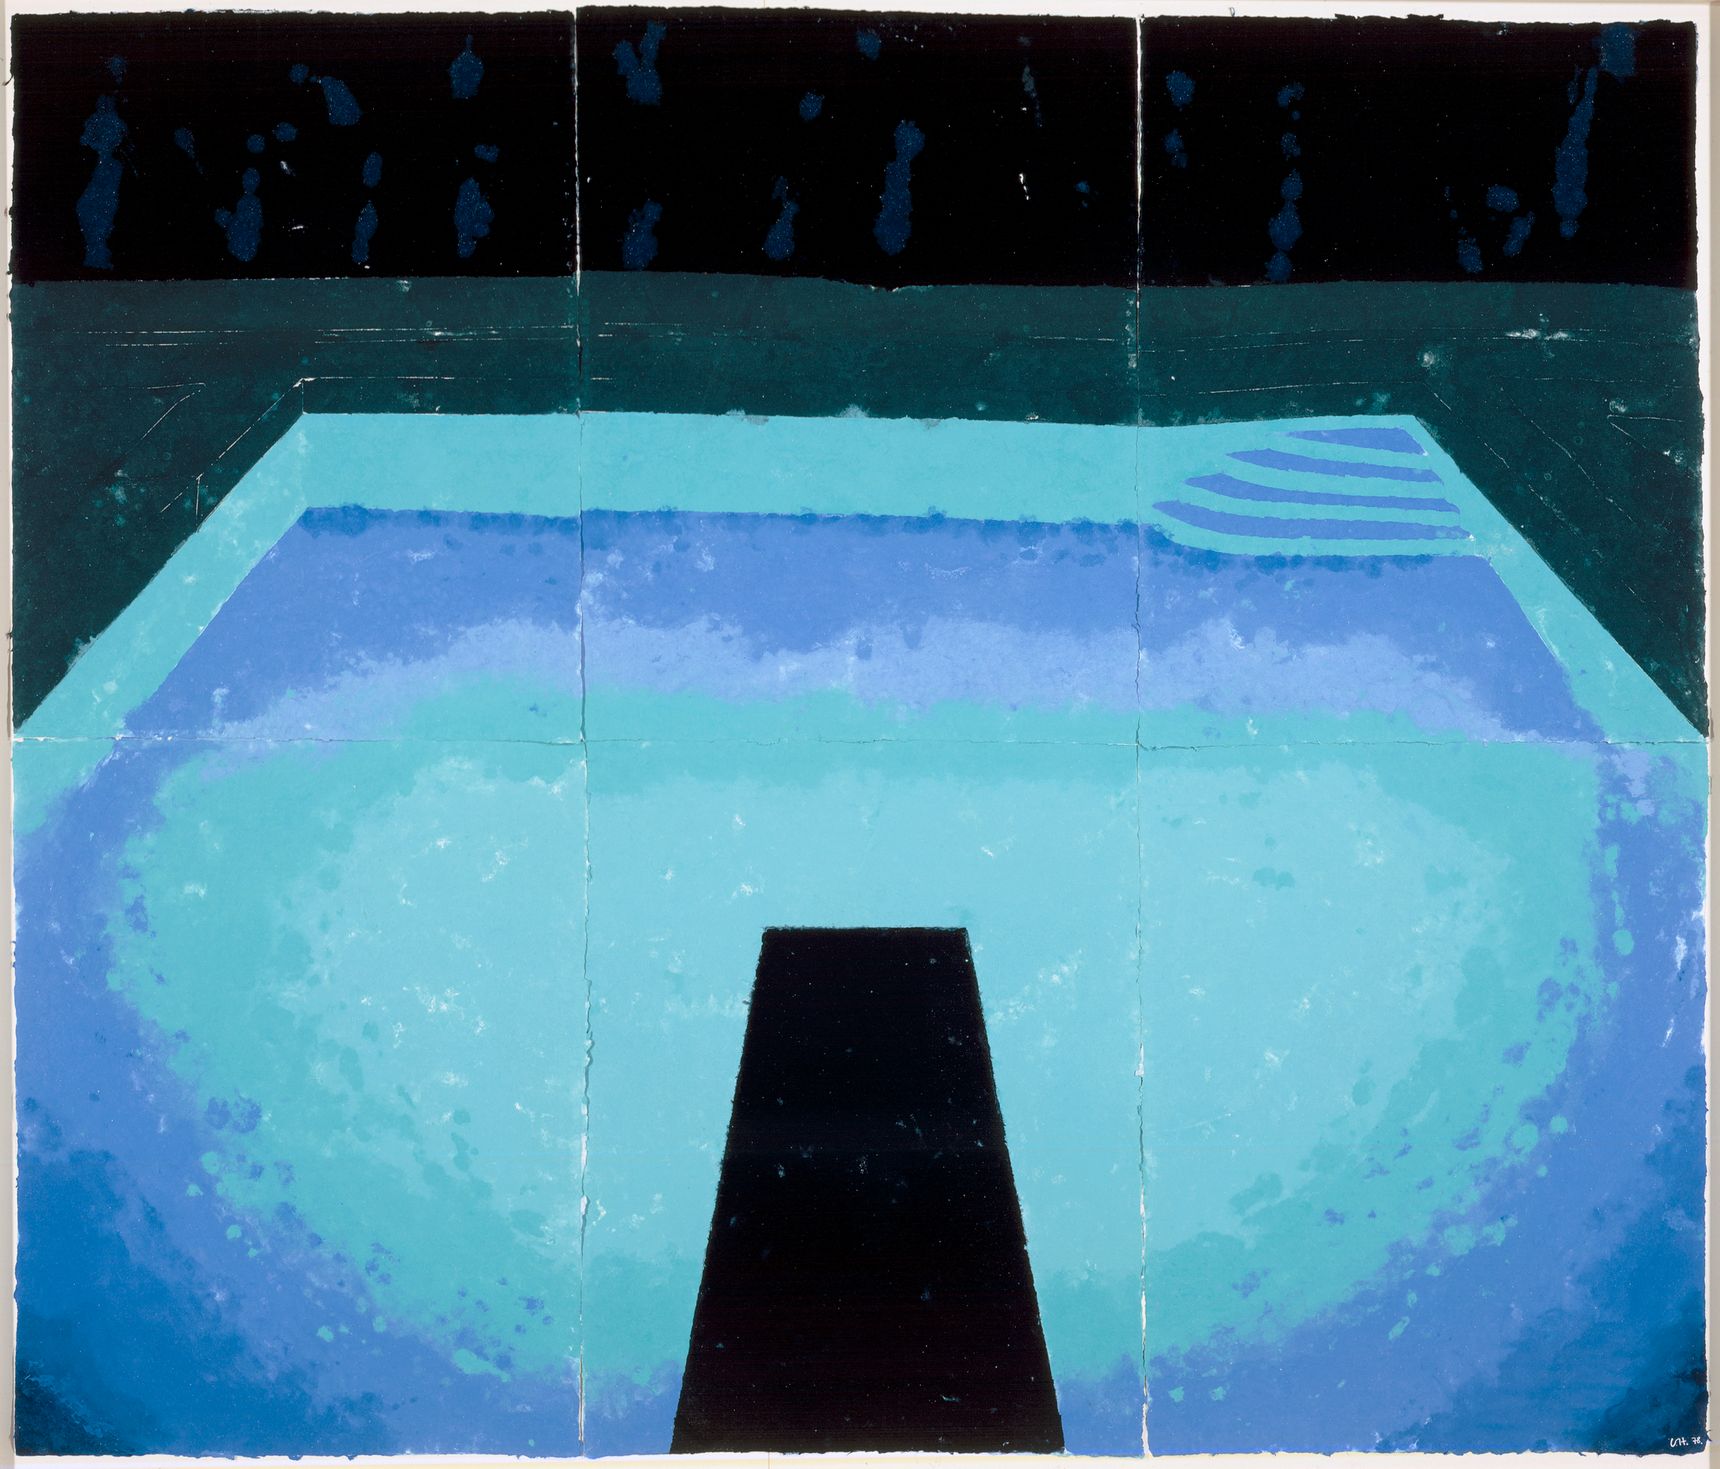 David Hockney, ‘Piscine a minuit, Paper Pool 19’ (1978).